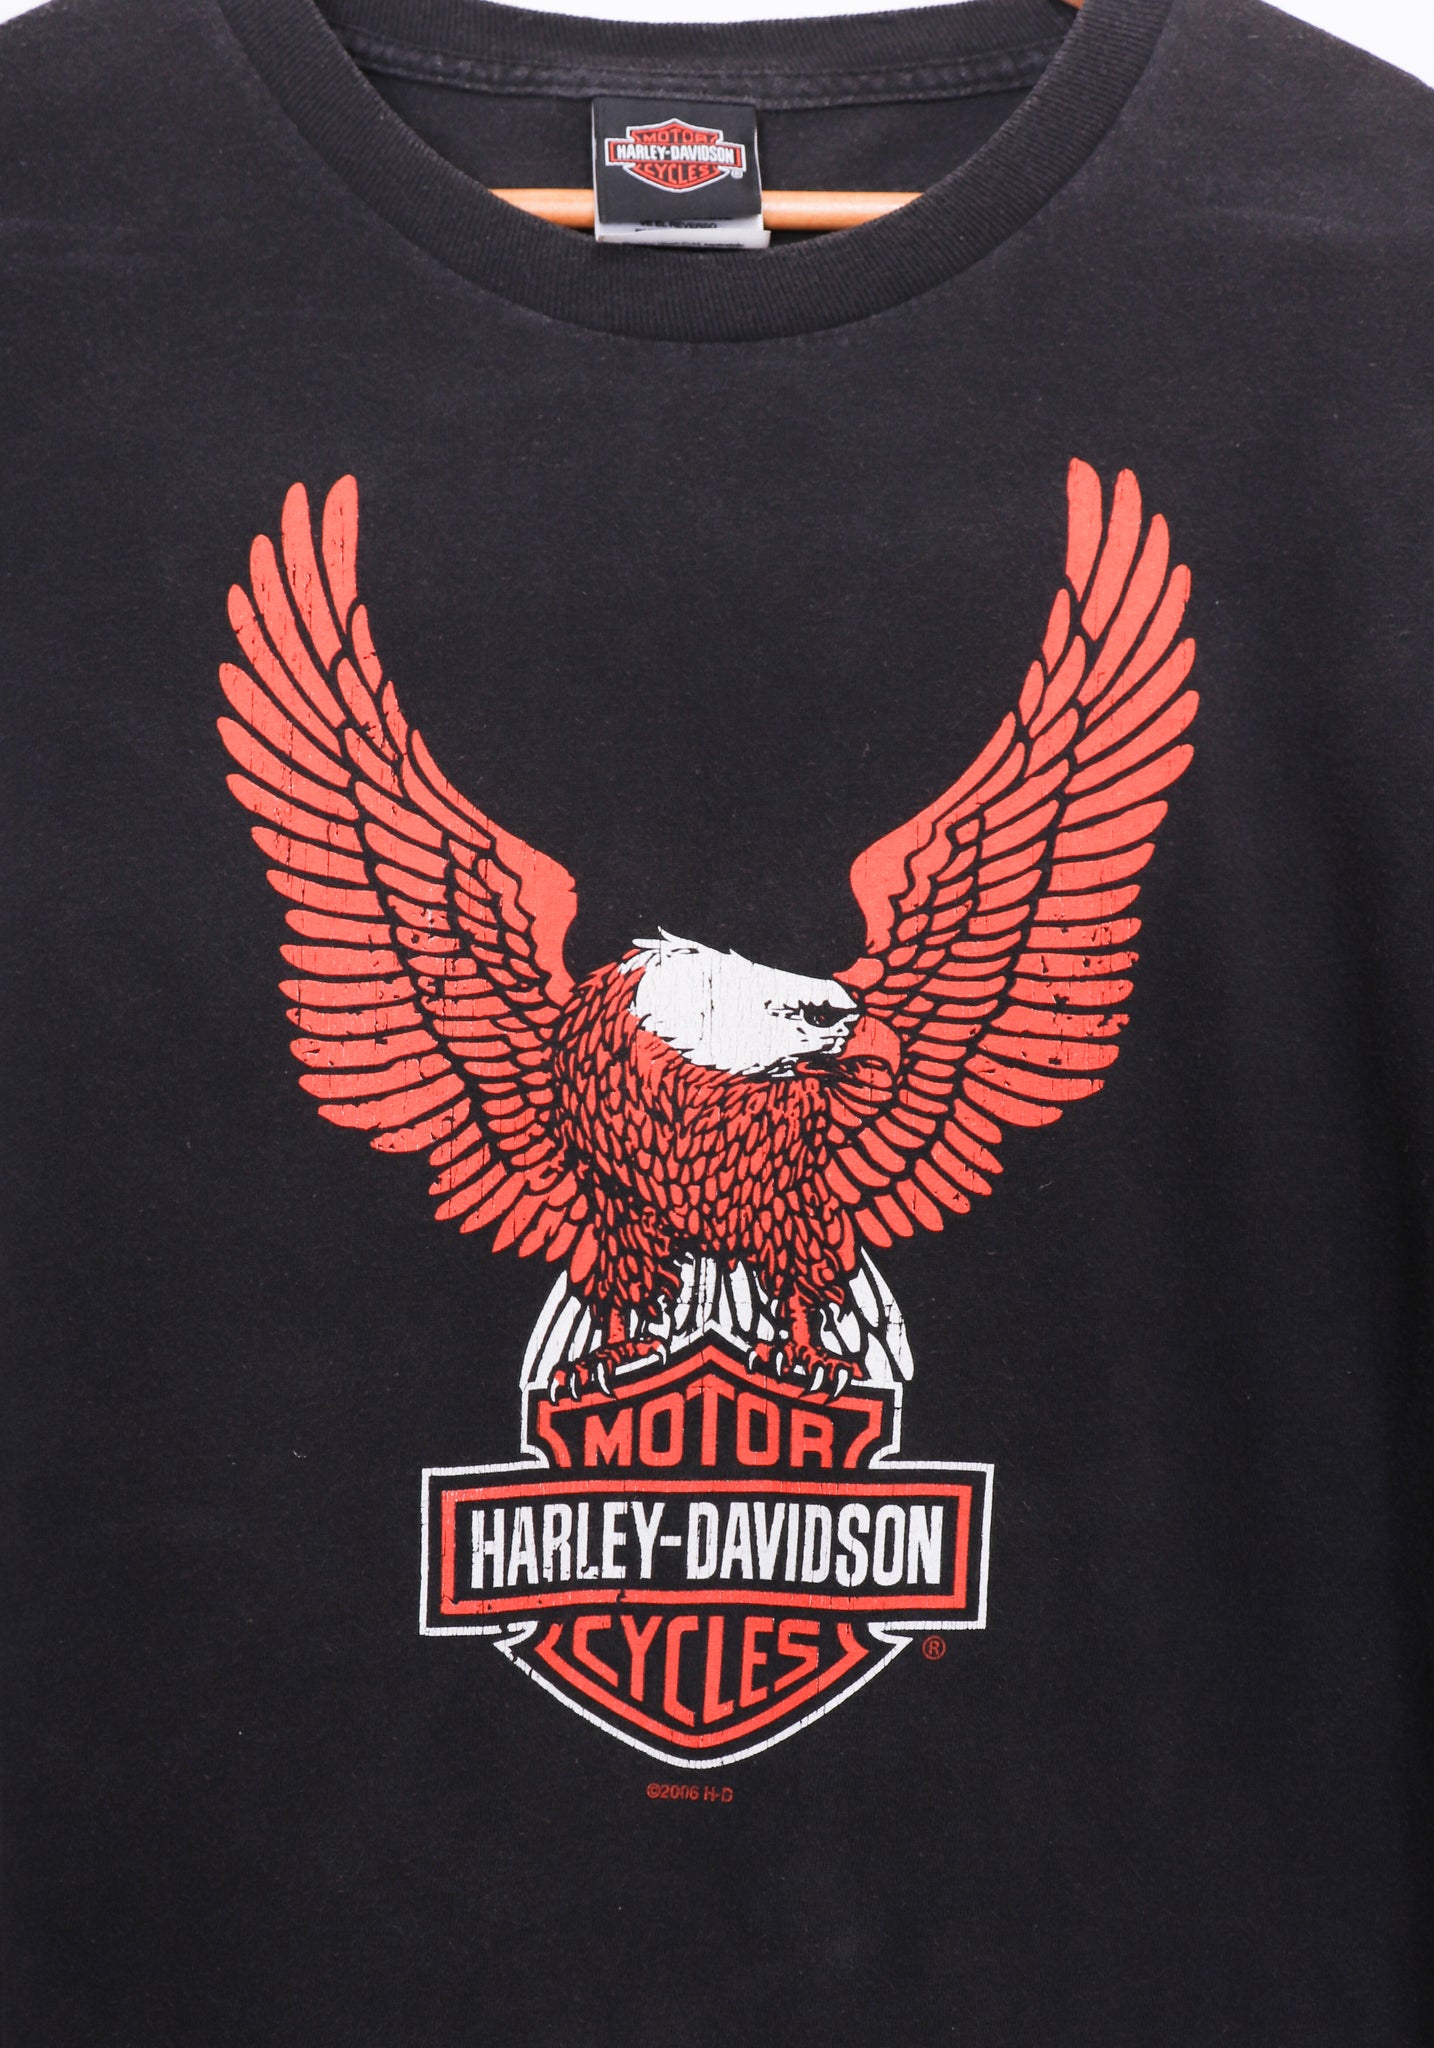 Early 2000s Harley Davidson Tulsa, Oklahoma T-Shirt